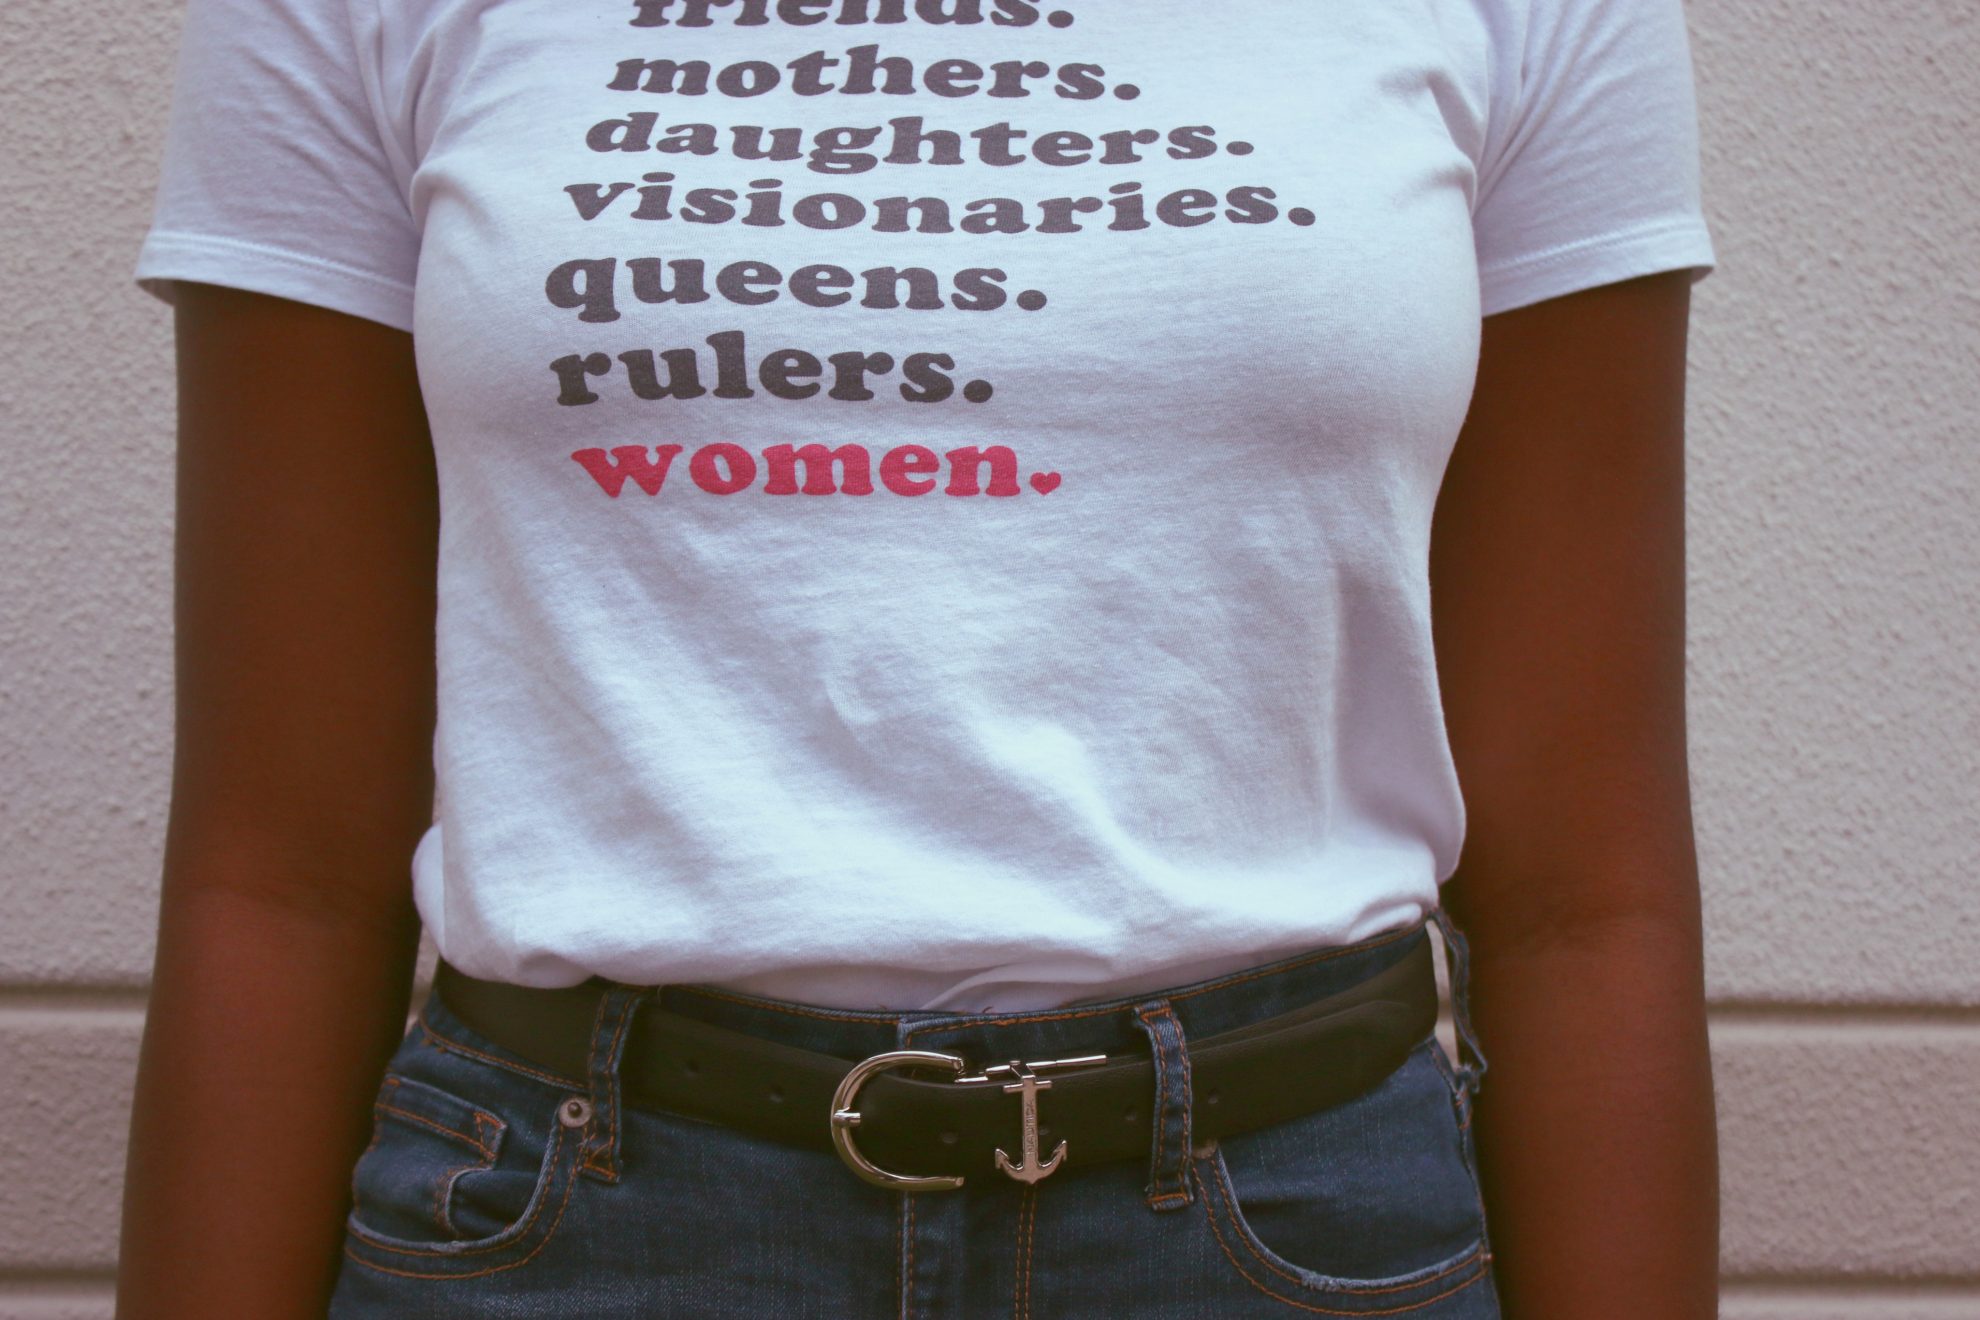 Frau im T-Shirt mit Aufdruck: "Friends. Mothers. Daughter. Visionaries. Queens. Rulers. Women."